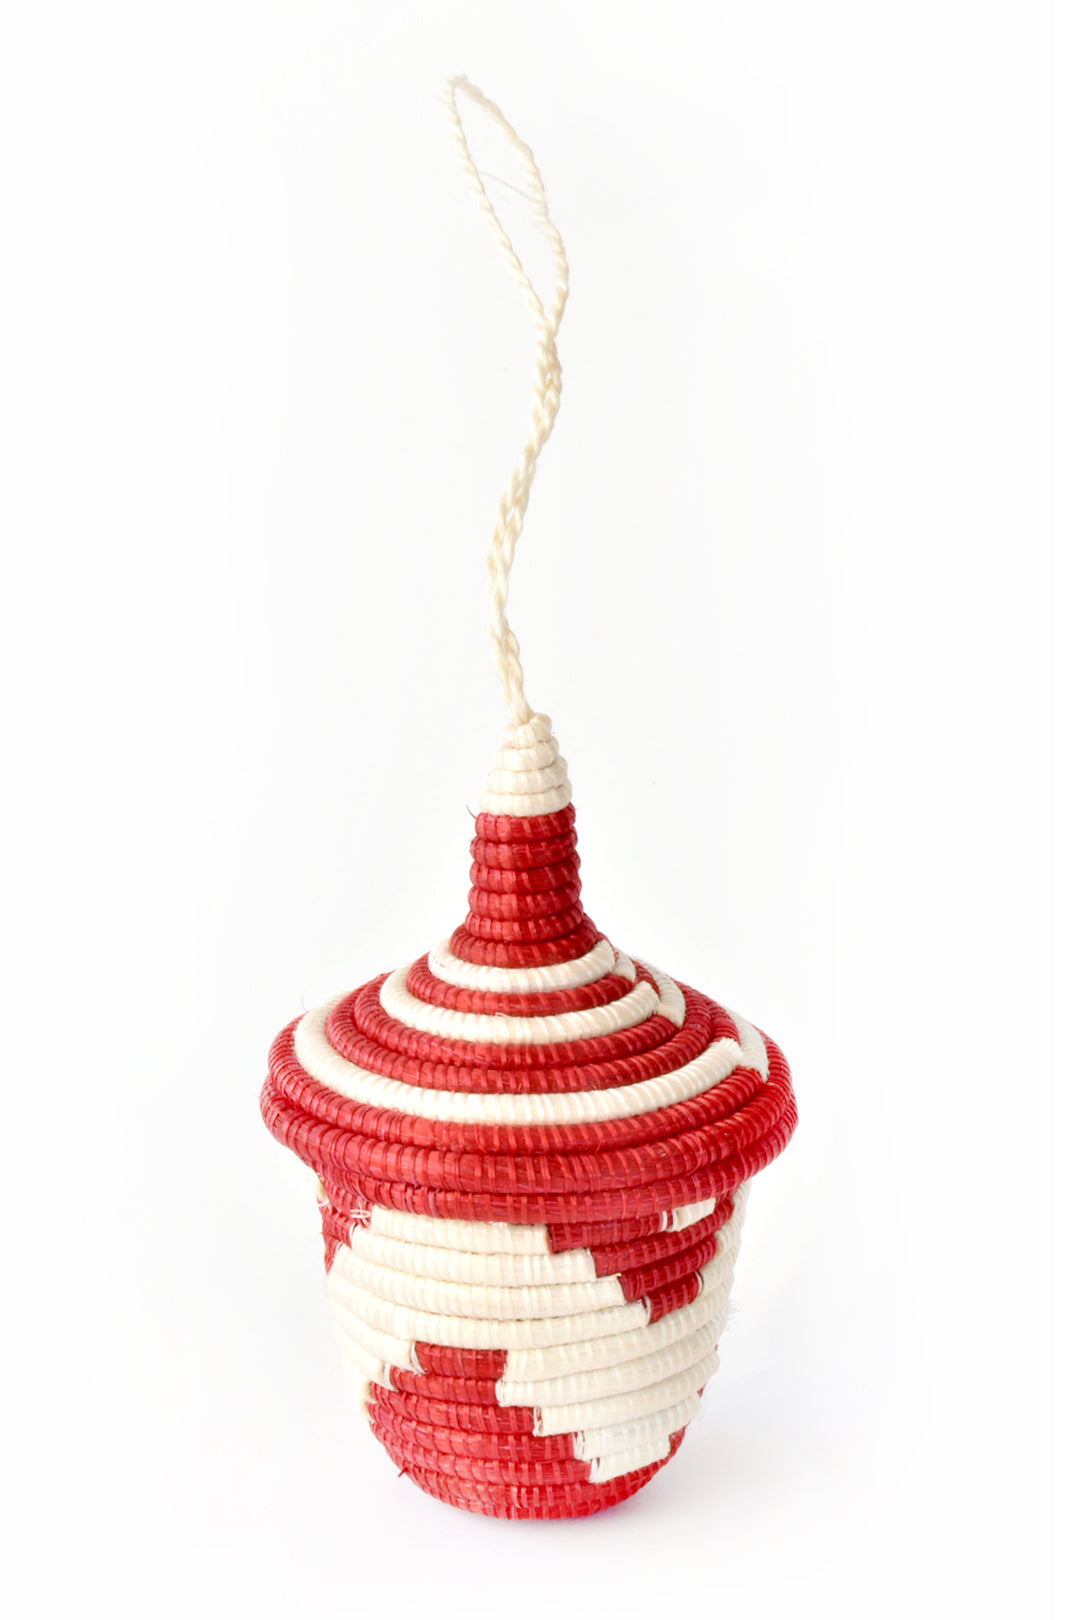 Rwandan Giving Basket Ornament in Red